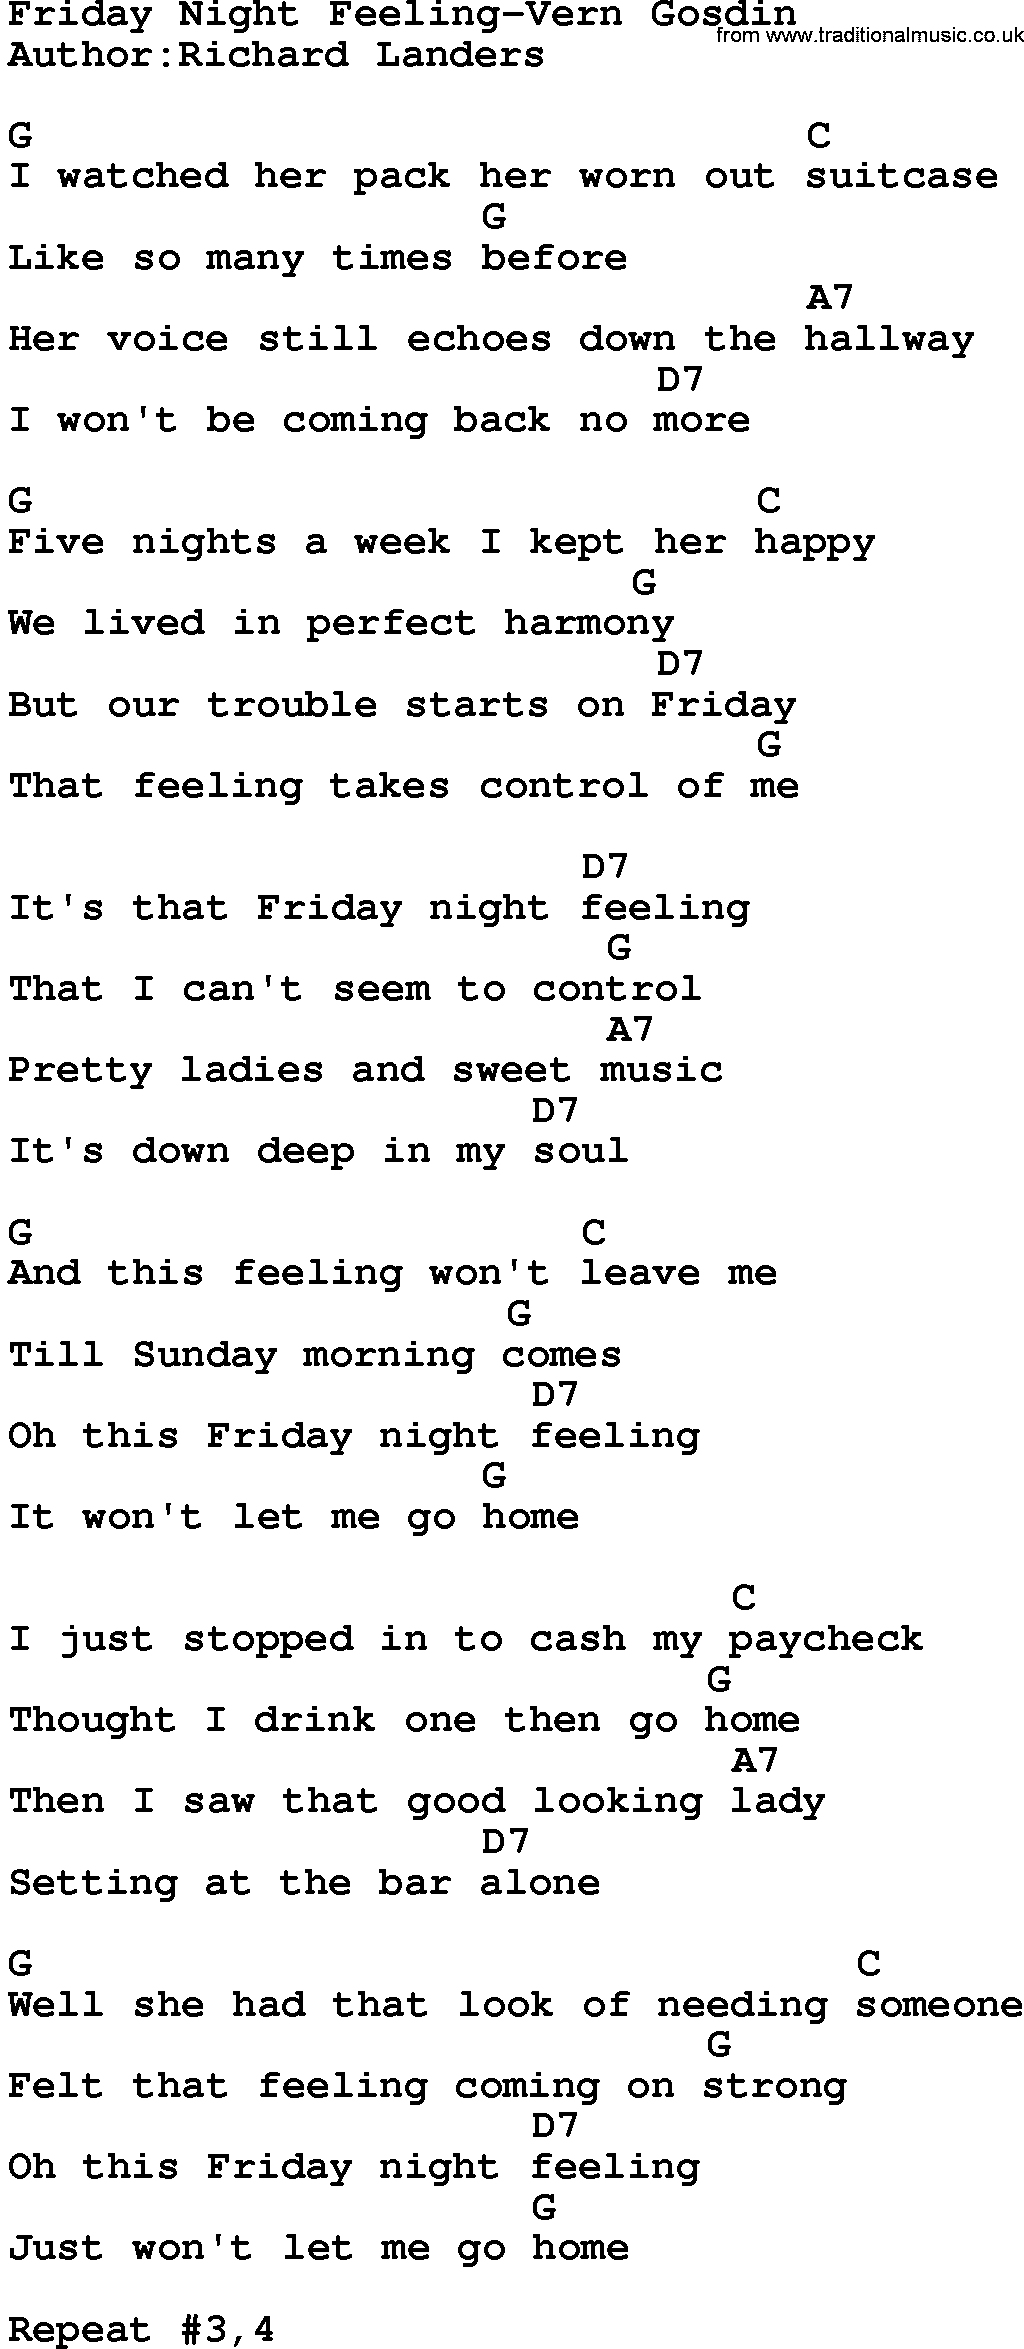 Country music song: Friday Night Feeling-Vern Gosdin lyrics and chords